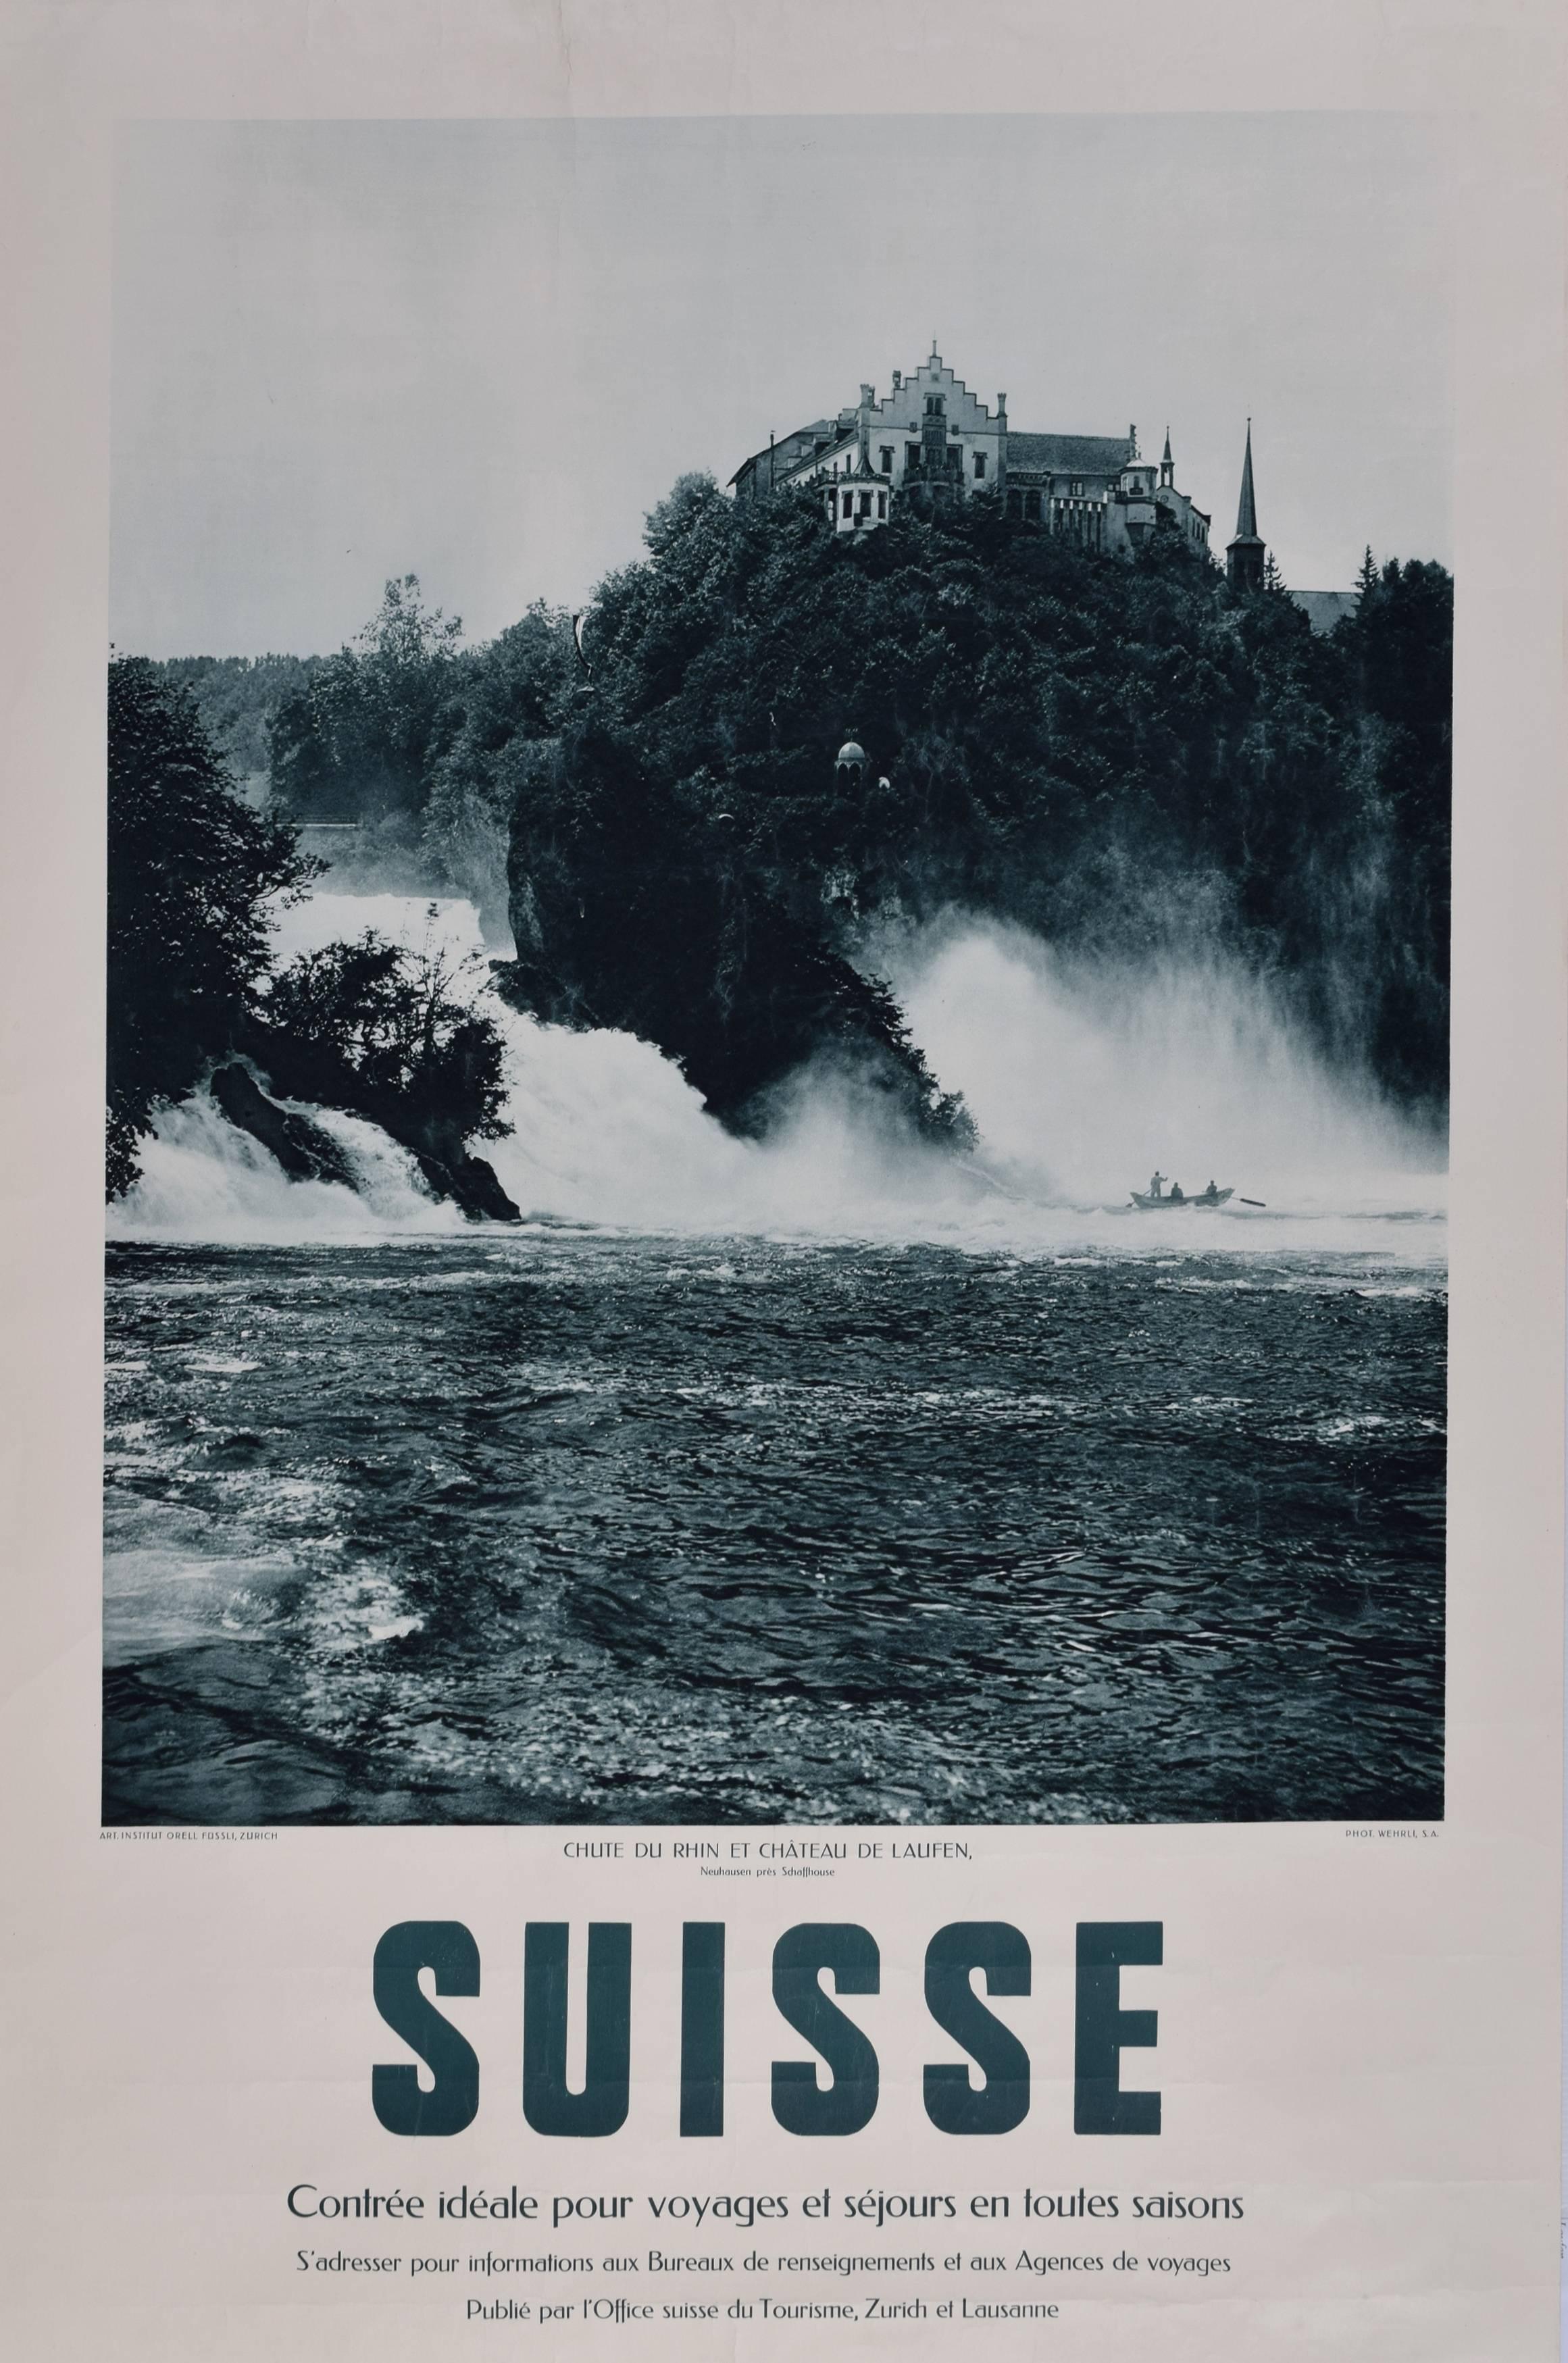 Unknown Landscape Photograph - Suisse - Chutes du Rhin - Rheinfall - Waterfalls: 1925 Swiss original poster  